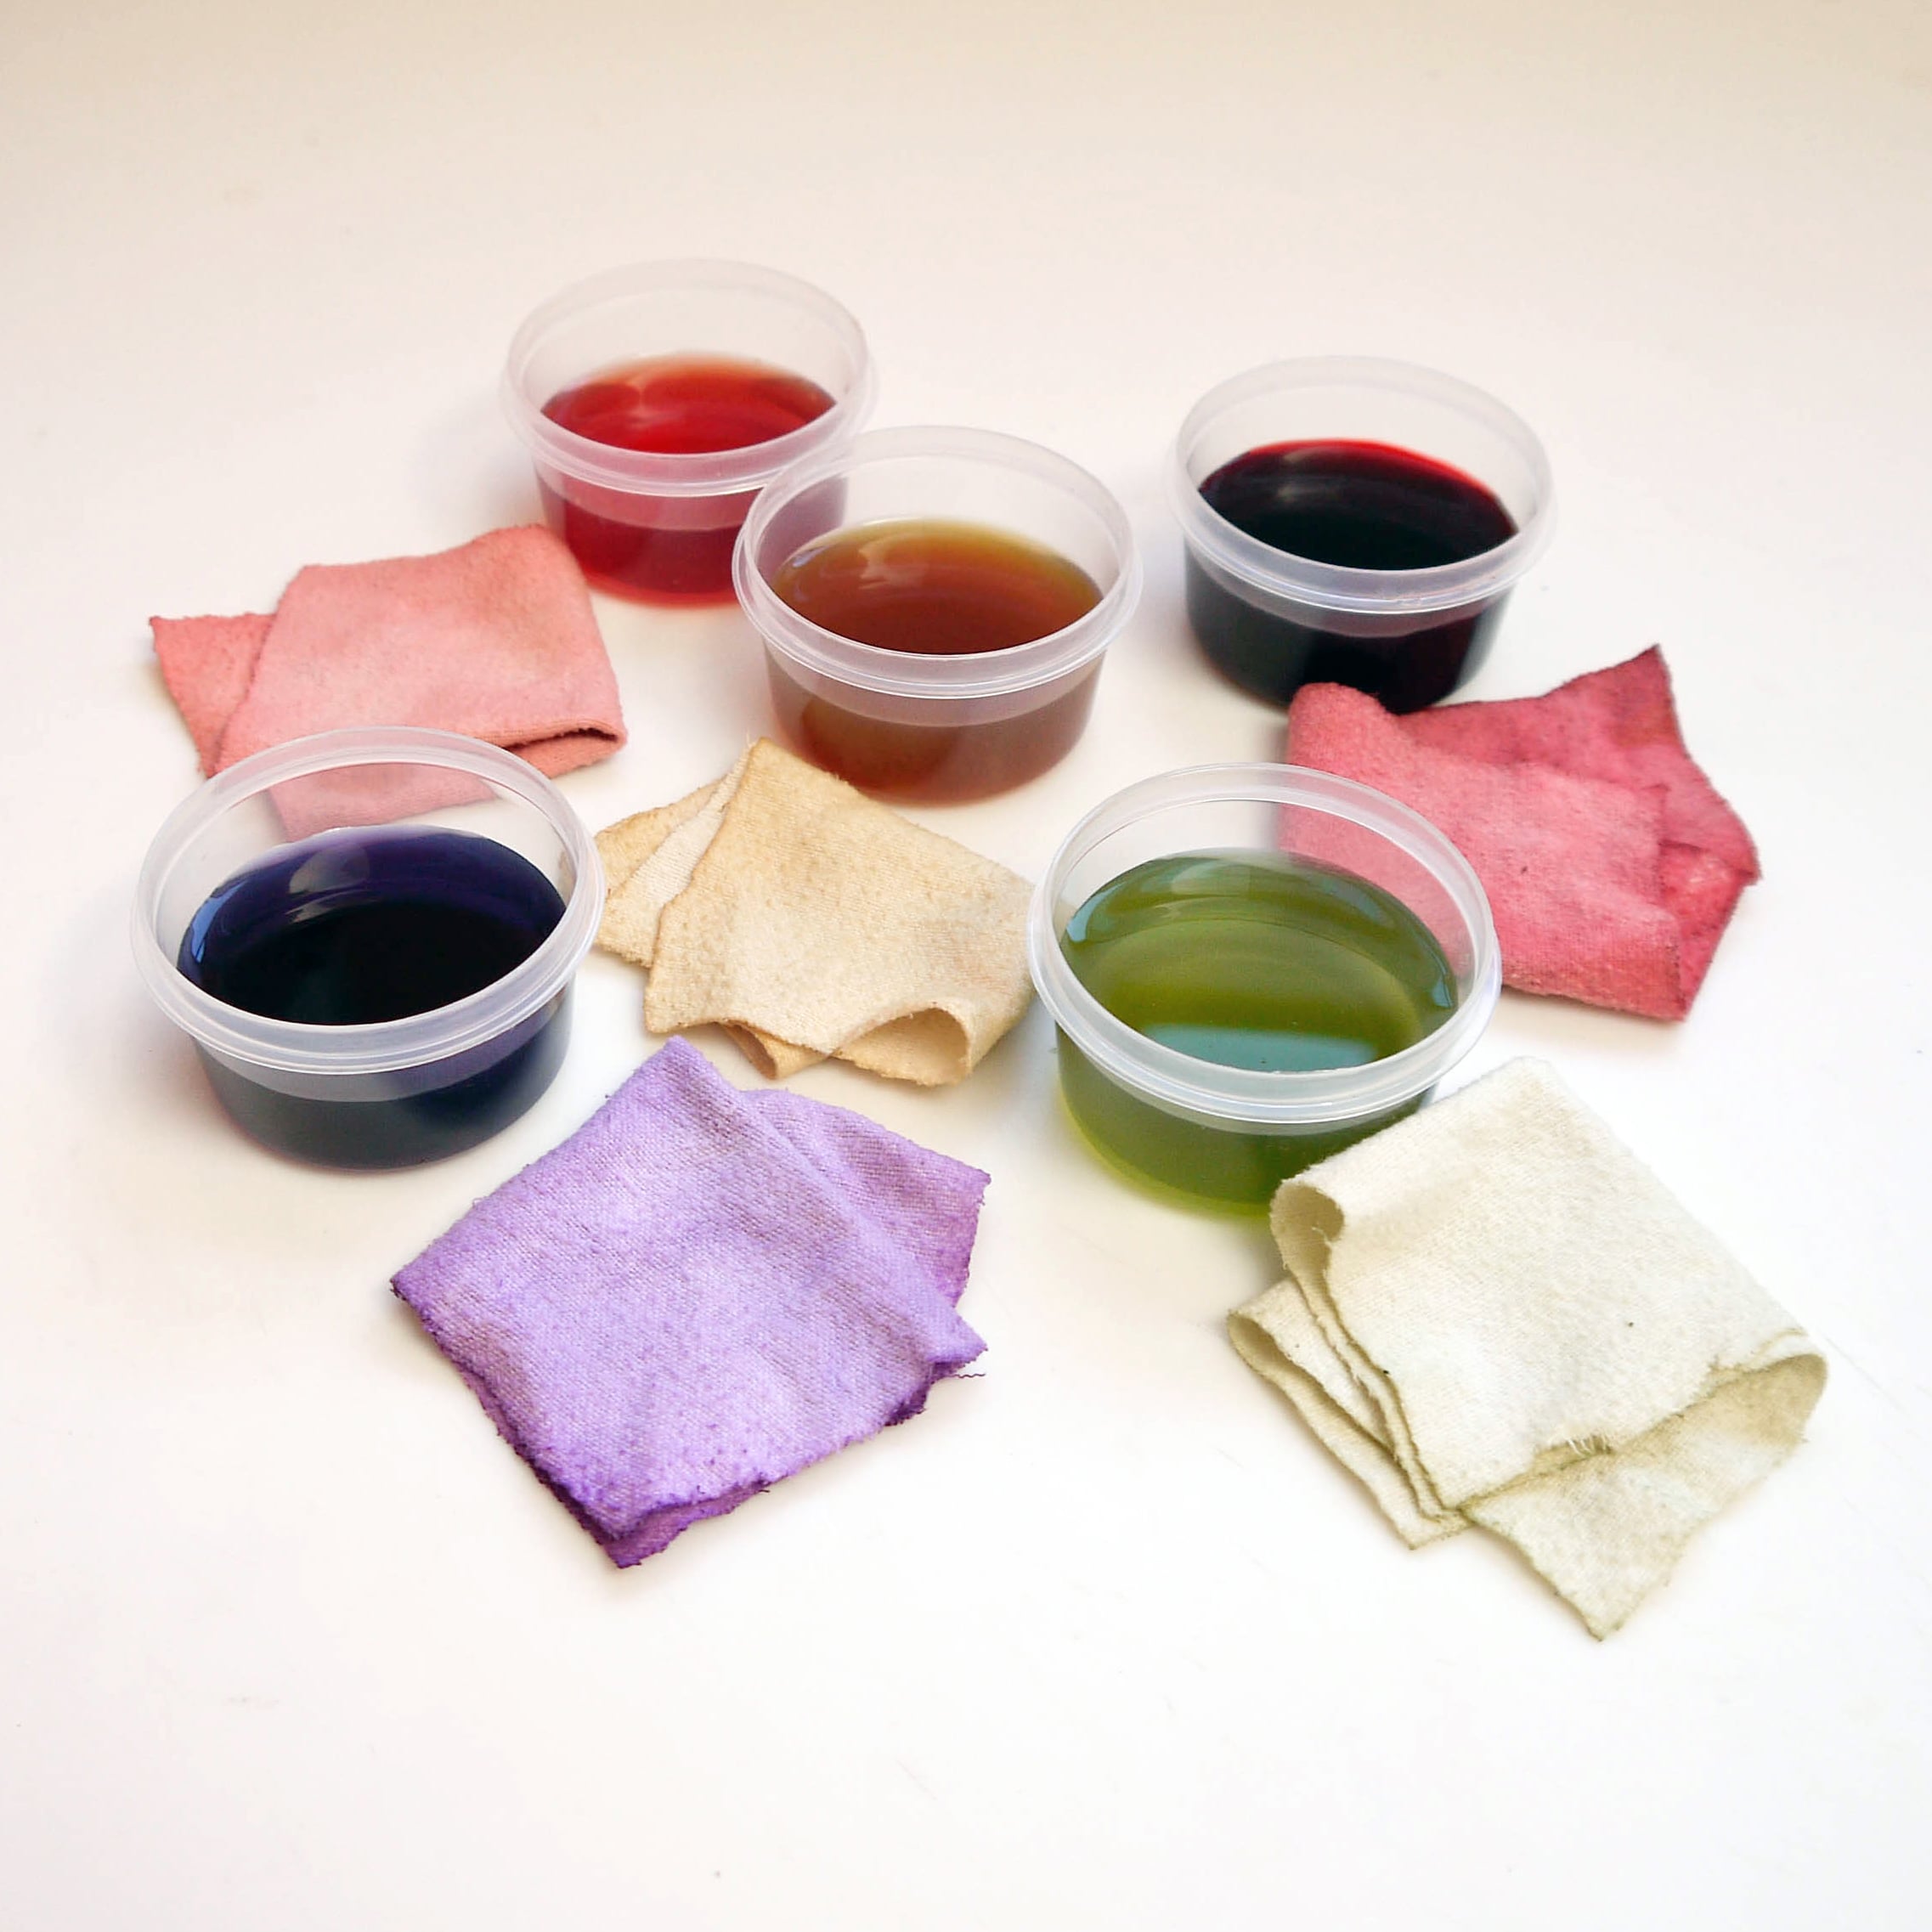 Making Natural Dye Using Vegetables